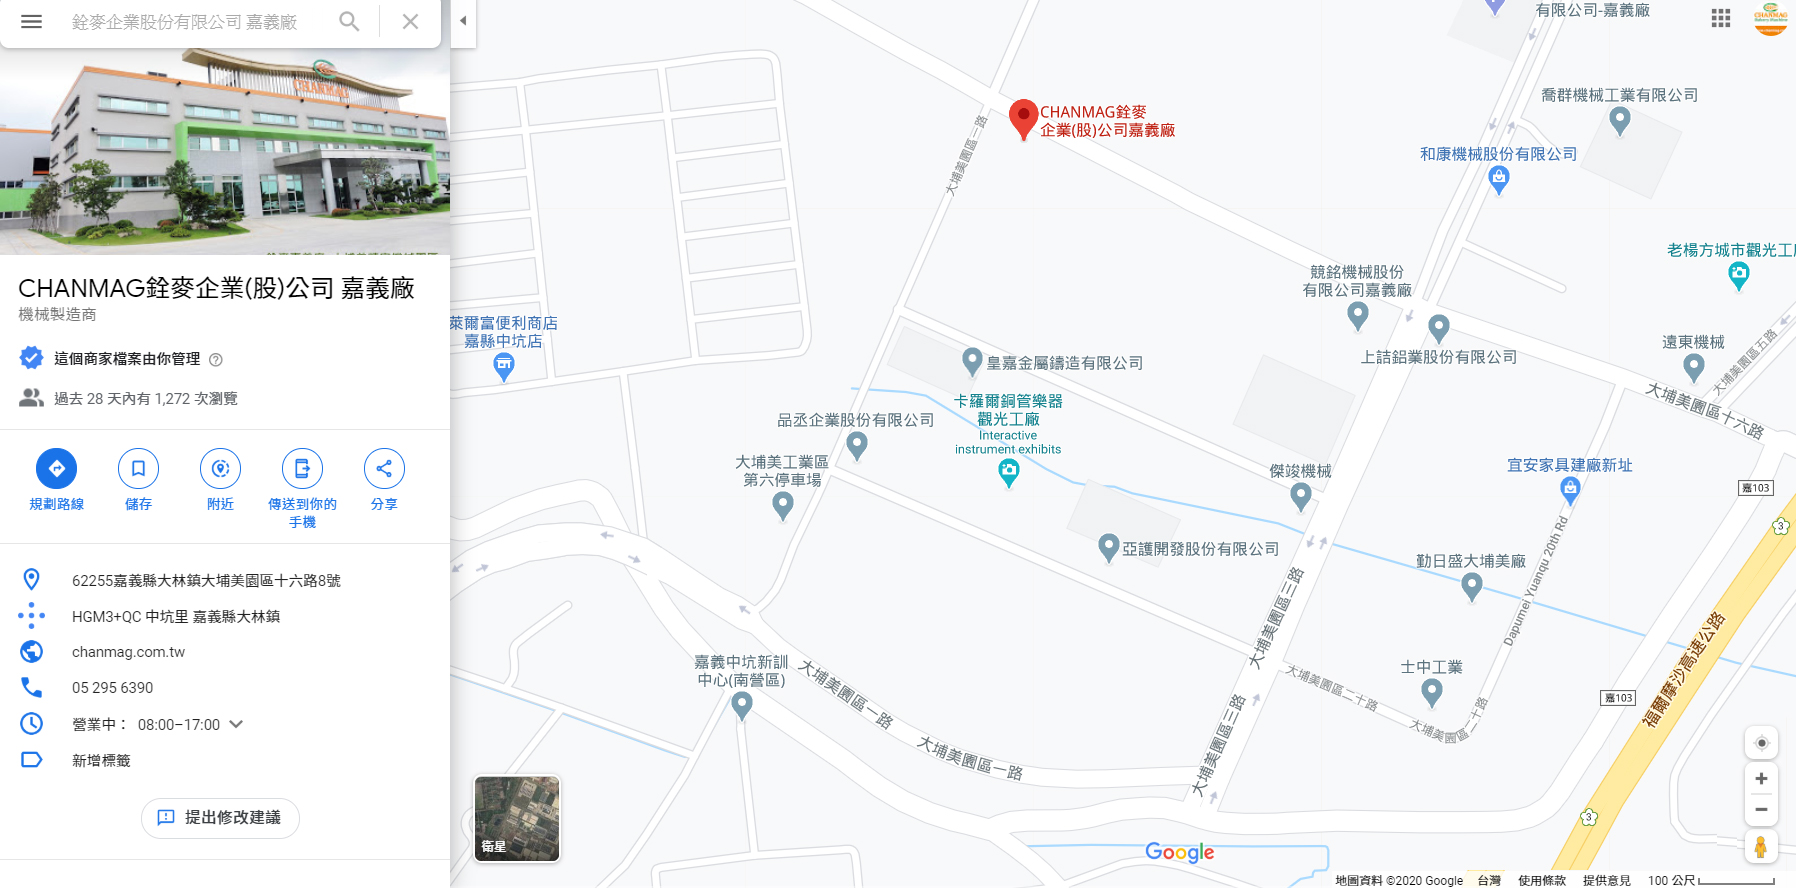 Google Map search 銓麥嘉義廠